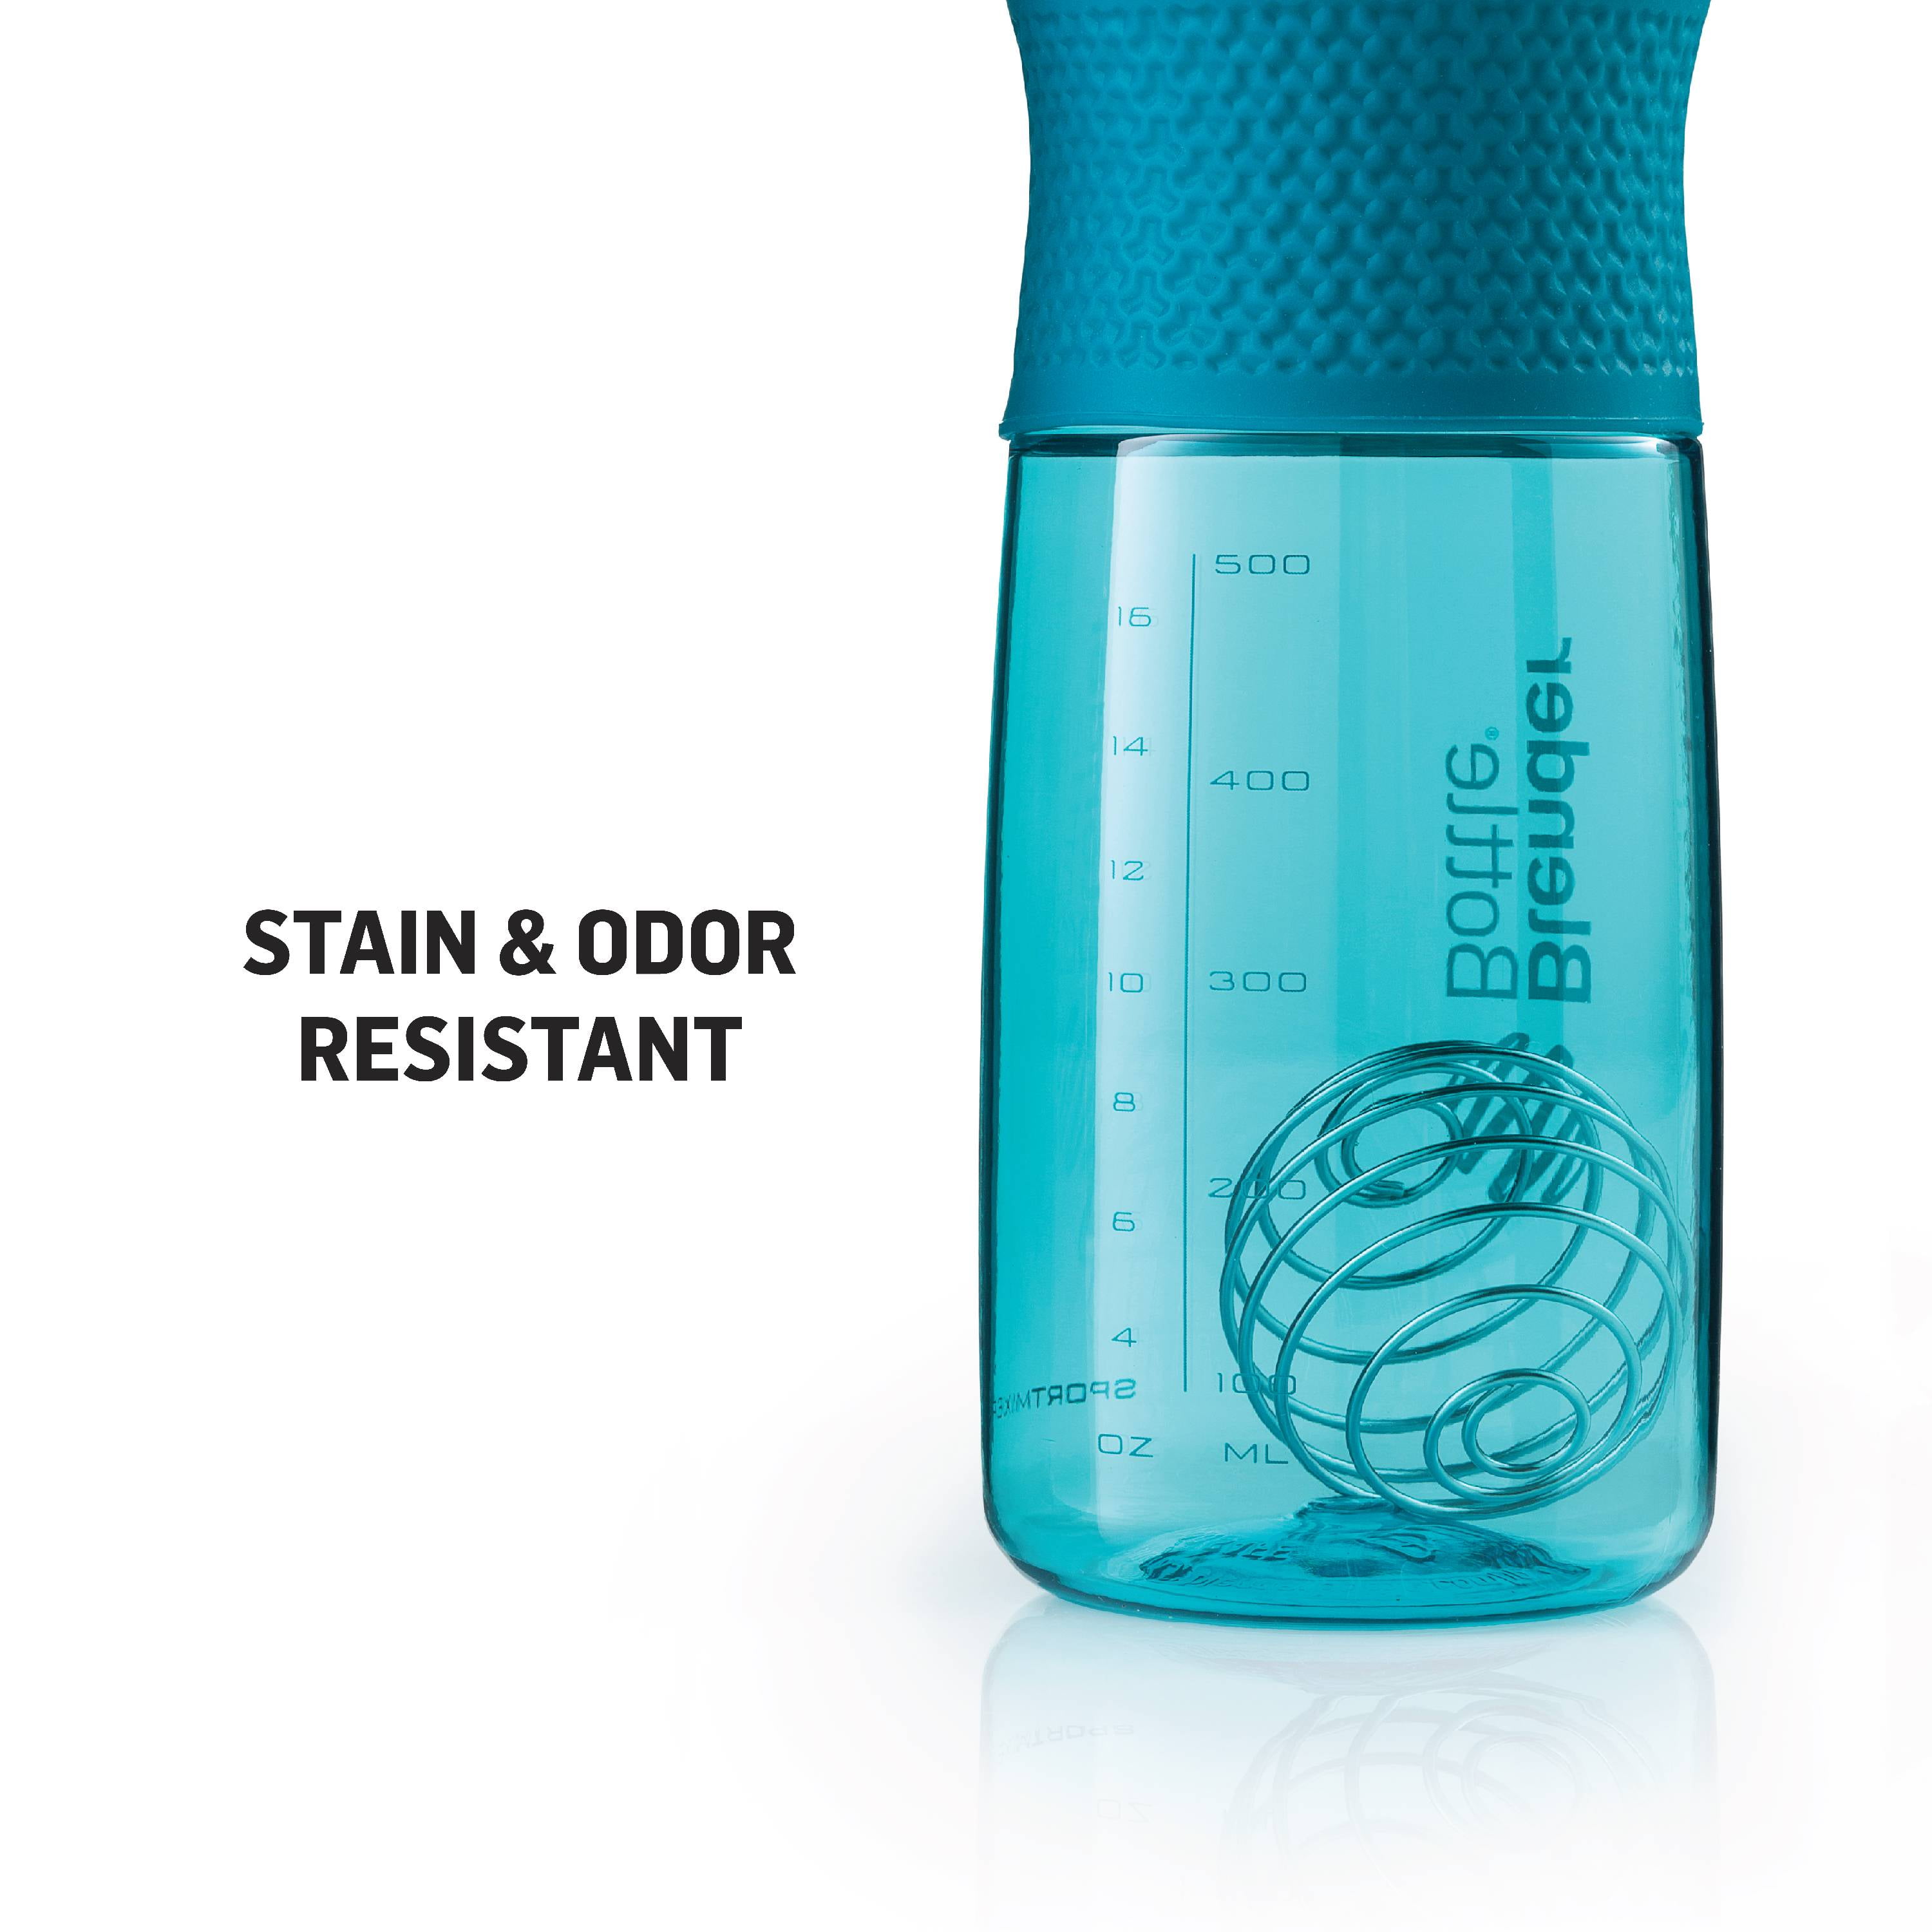 20 oz. Blender Bottle – BioPharma Scientific